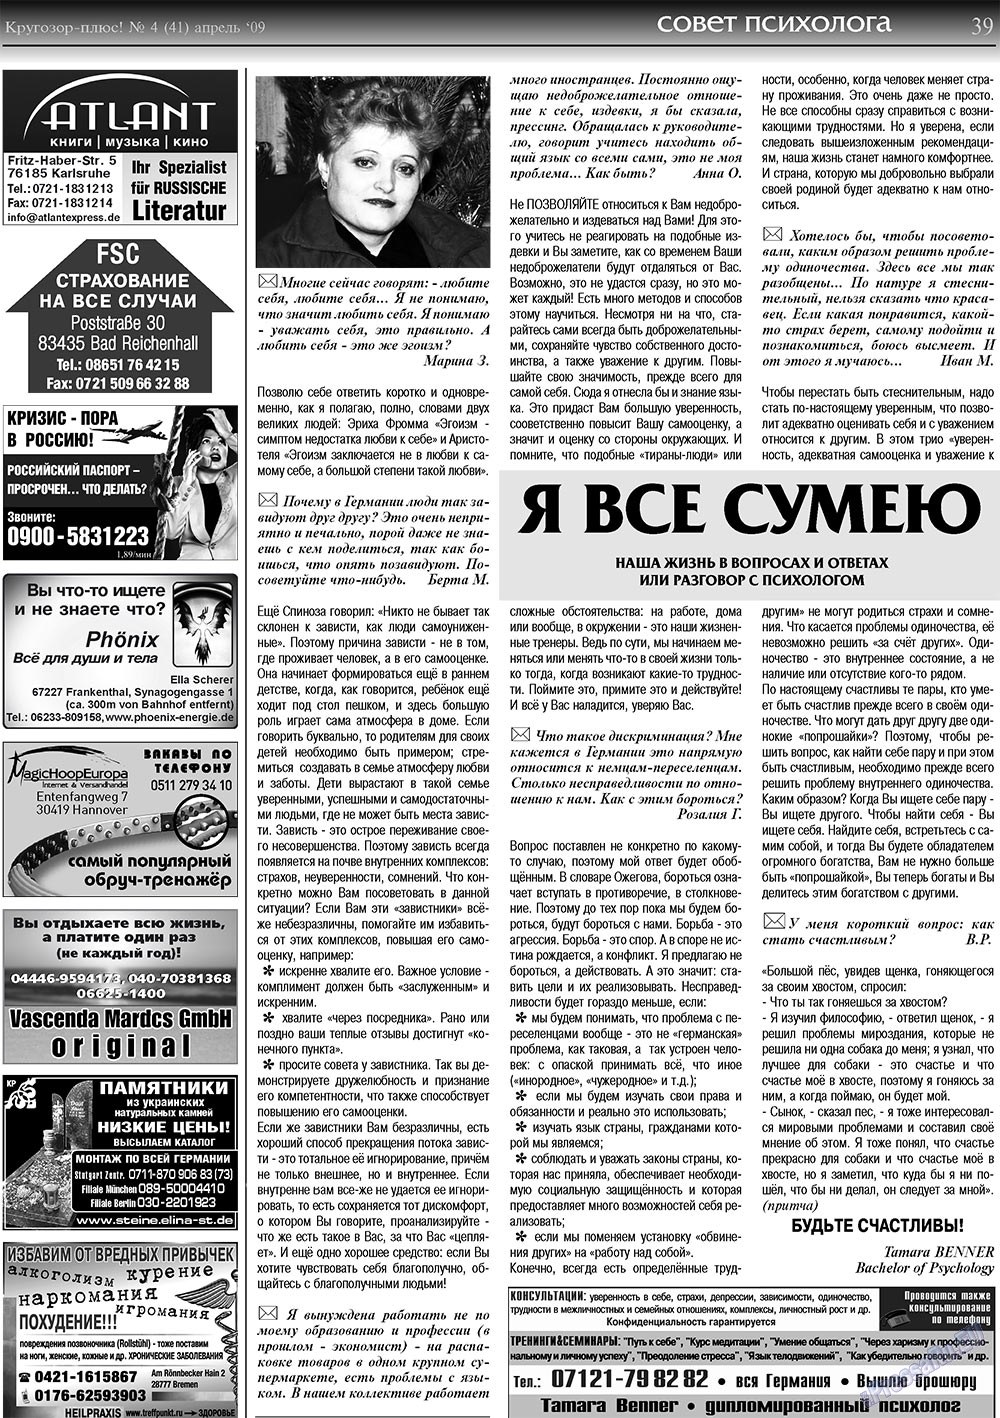 Кругозор плюс! (газета). 2009 год, номер 4, стр. 39